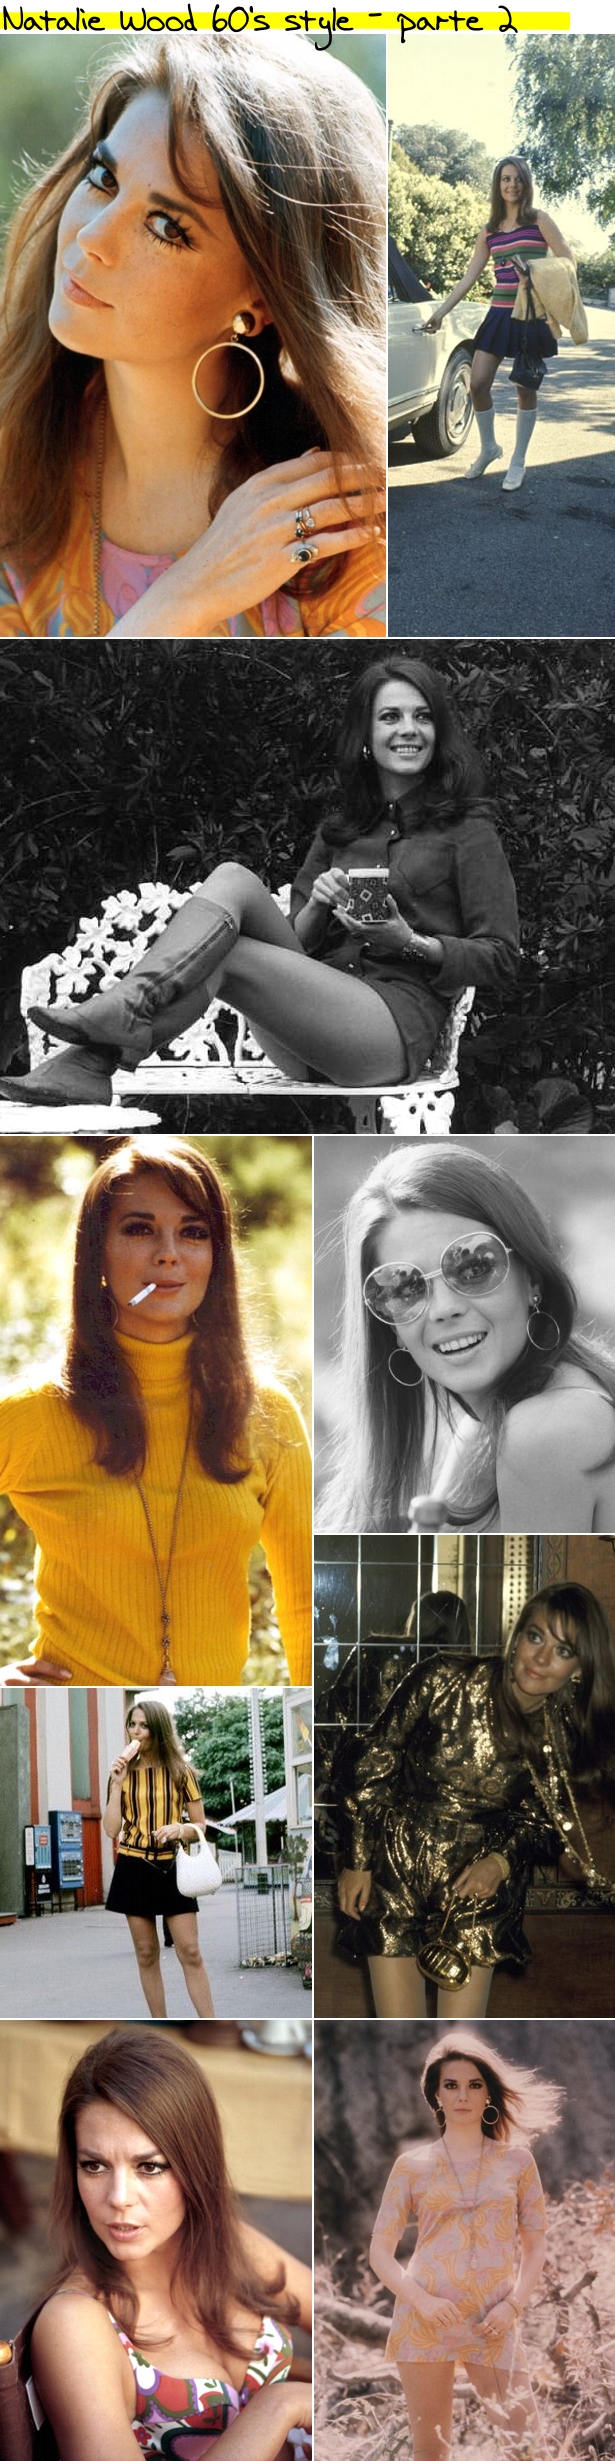 Natalie Wood 60s style parte 2 Blog da Hilde celebra a beleza e o estilo da eterna musa Natalie Wood!